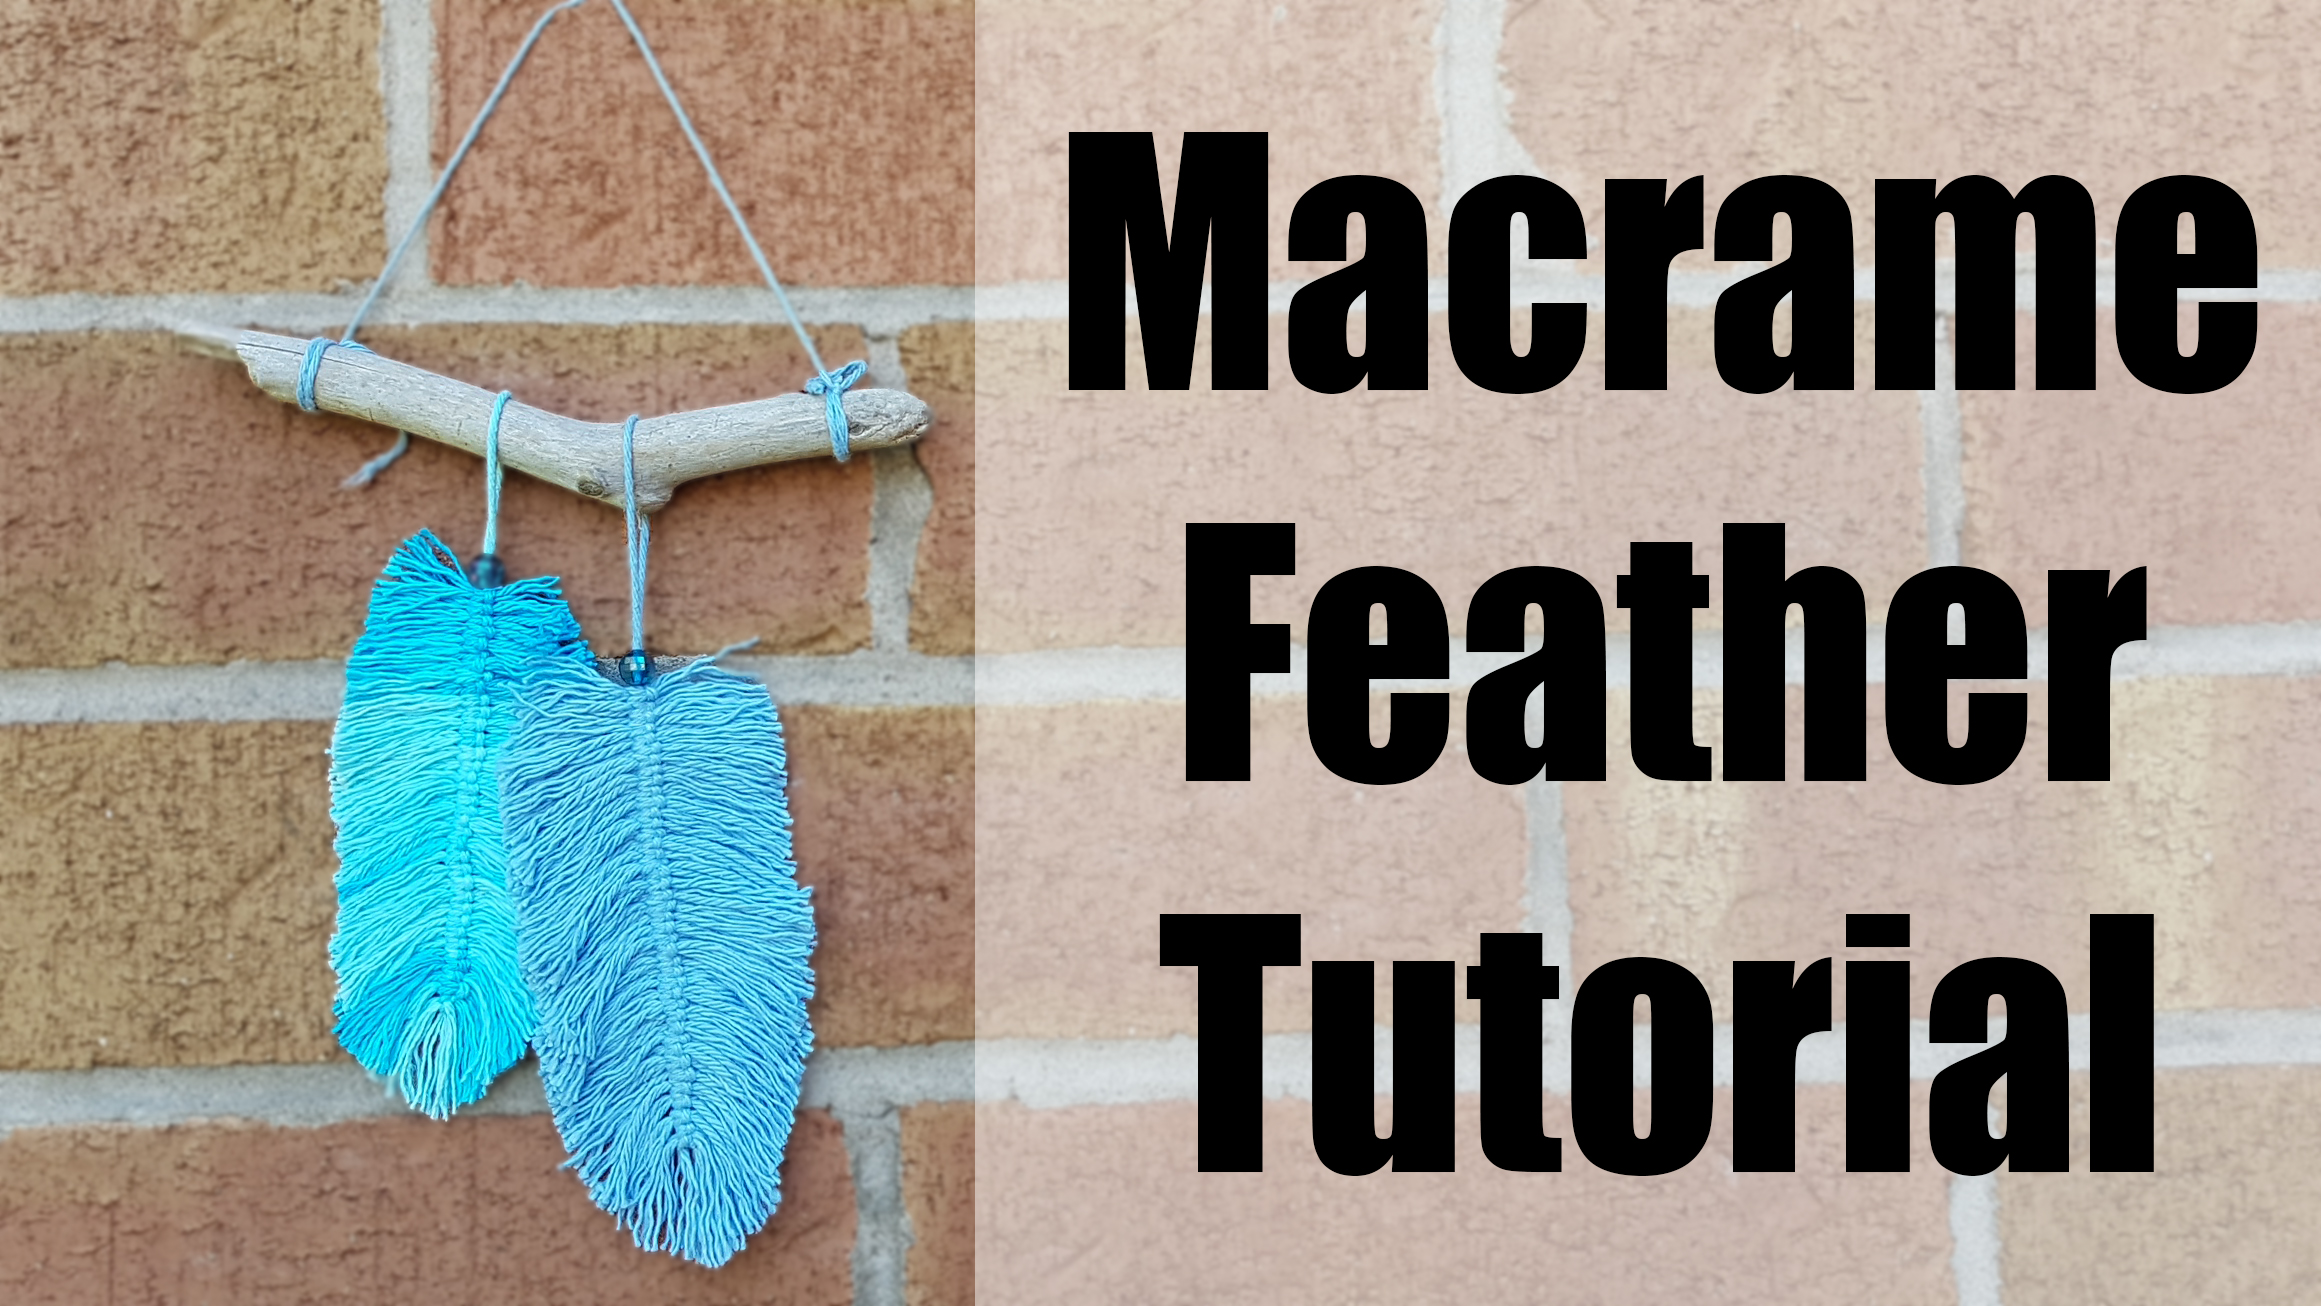 Macrame Feather tutorial